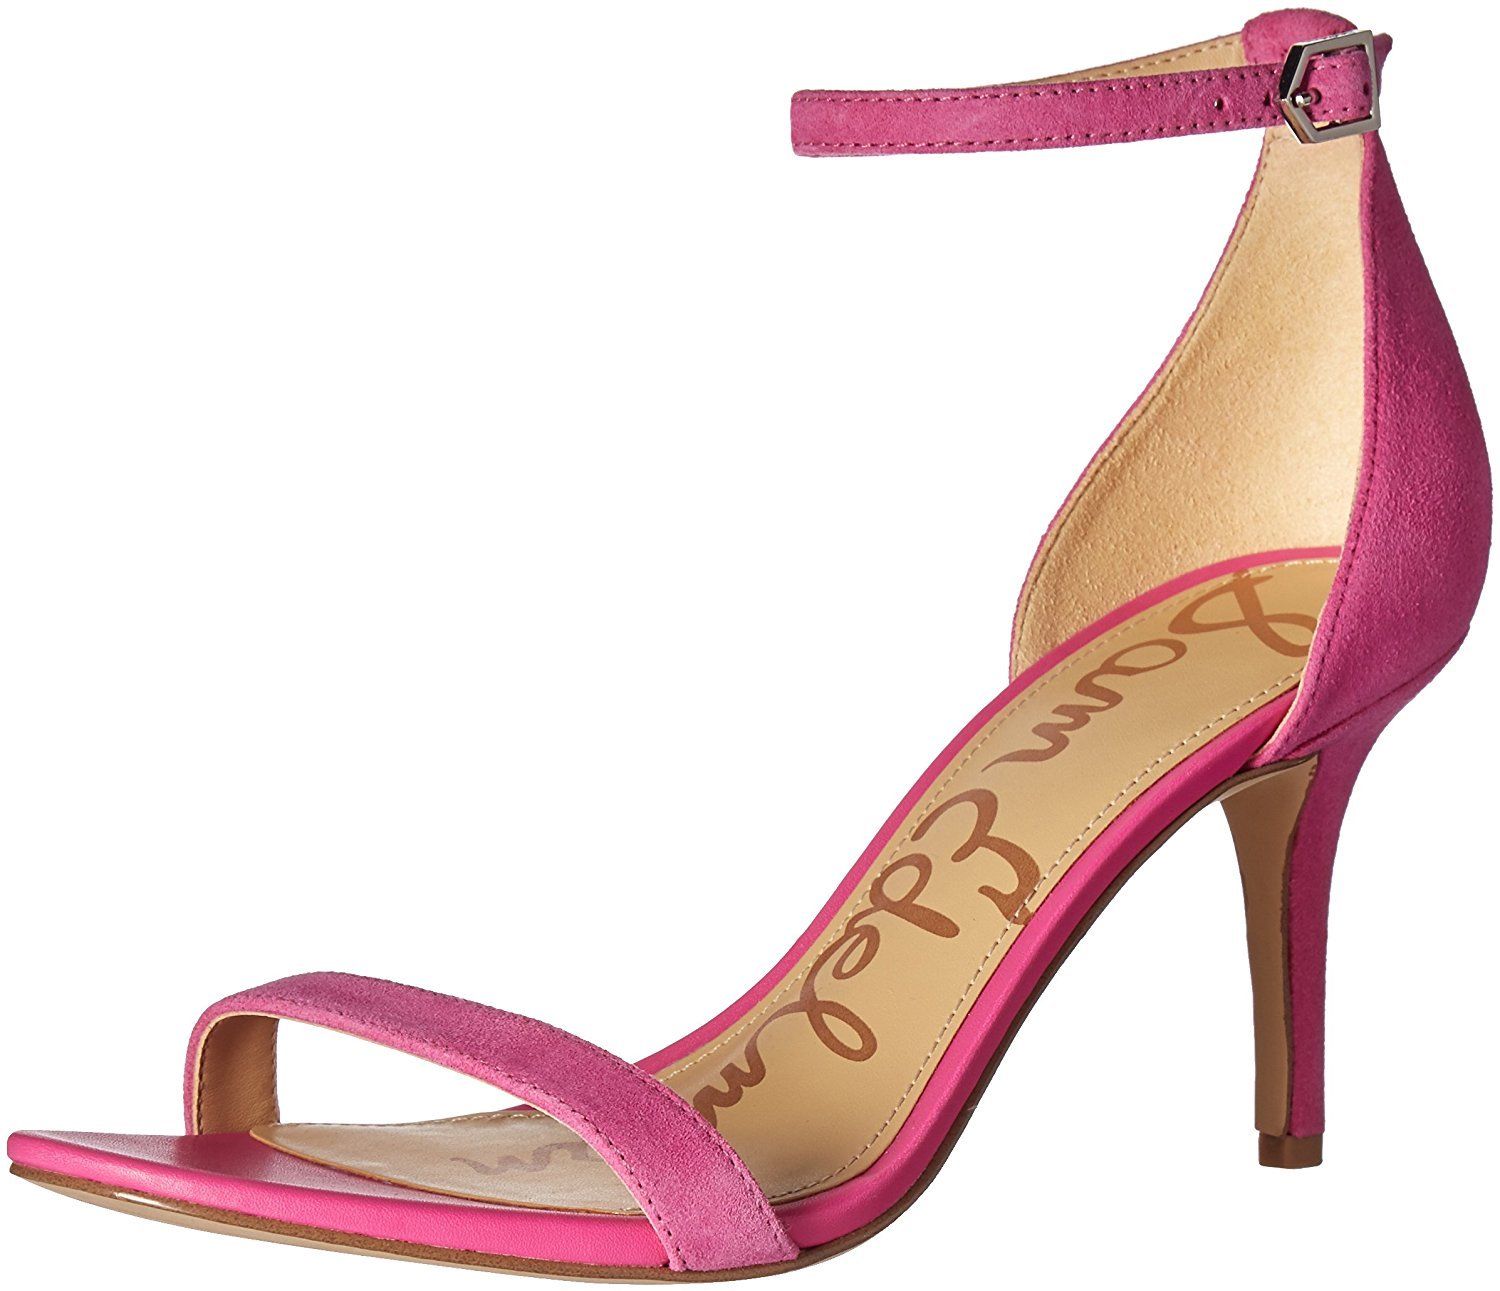 sam edelman burgundy heels